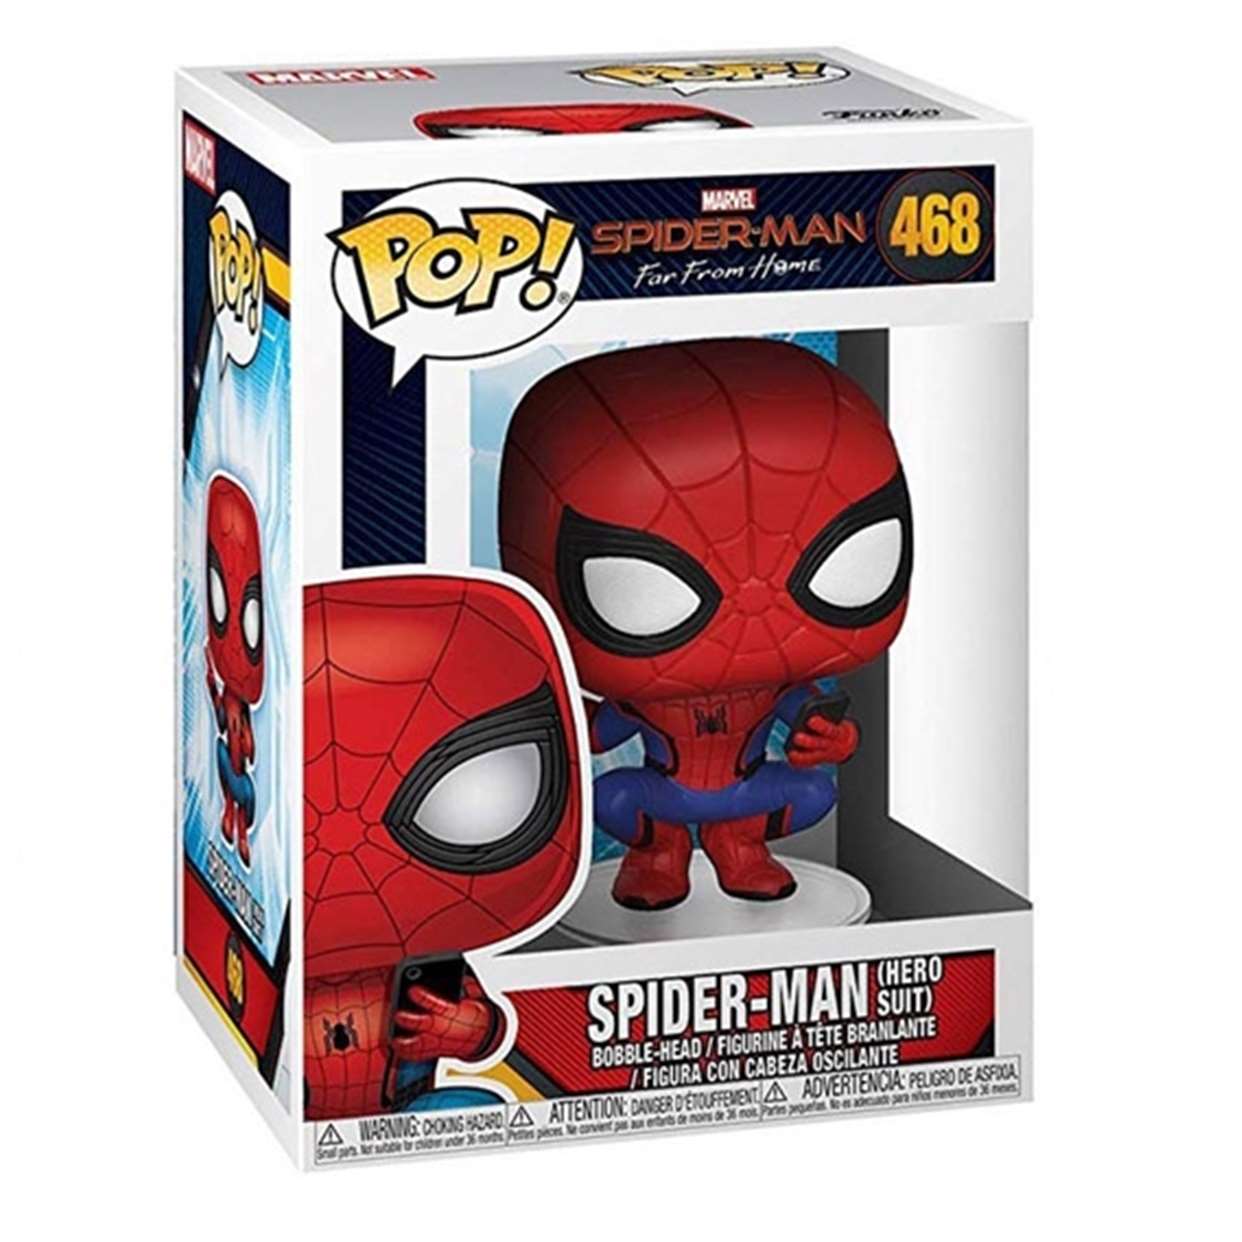 Spider Man #468 (hero Suit) Figura Funko Pop! Far From Home